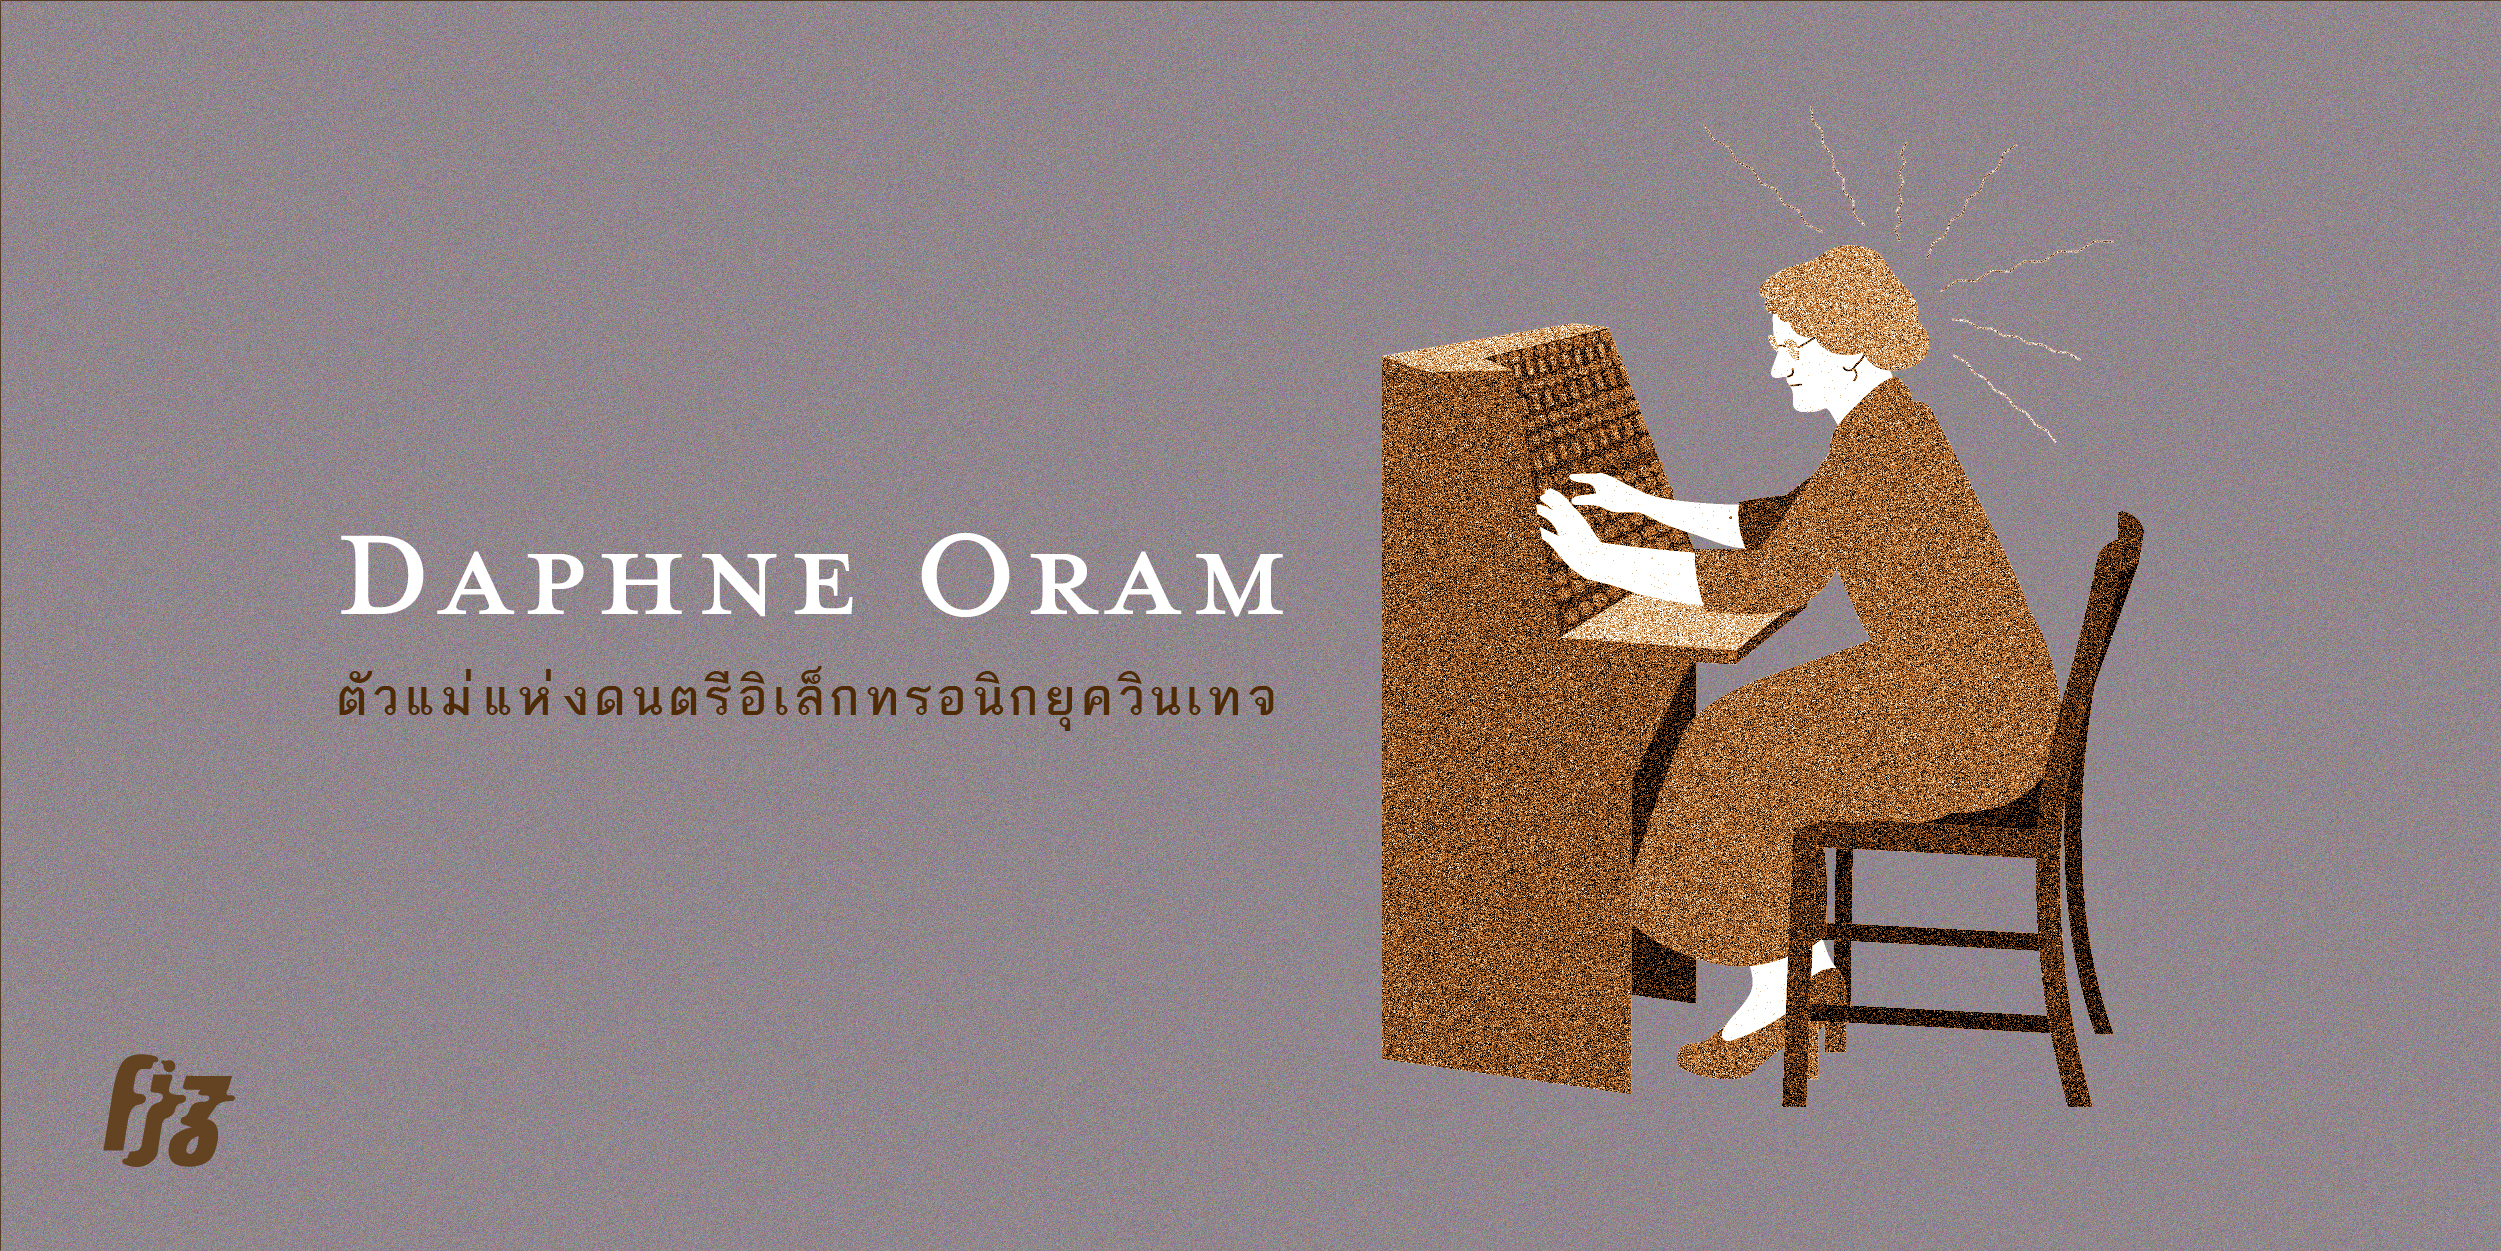 Daphne Oram อดีตพนักงาน BBC สู่ตัวแม่แห่งดนตรีอิเล็กทรอนิกยุควินเทจ